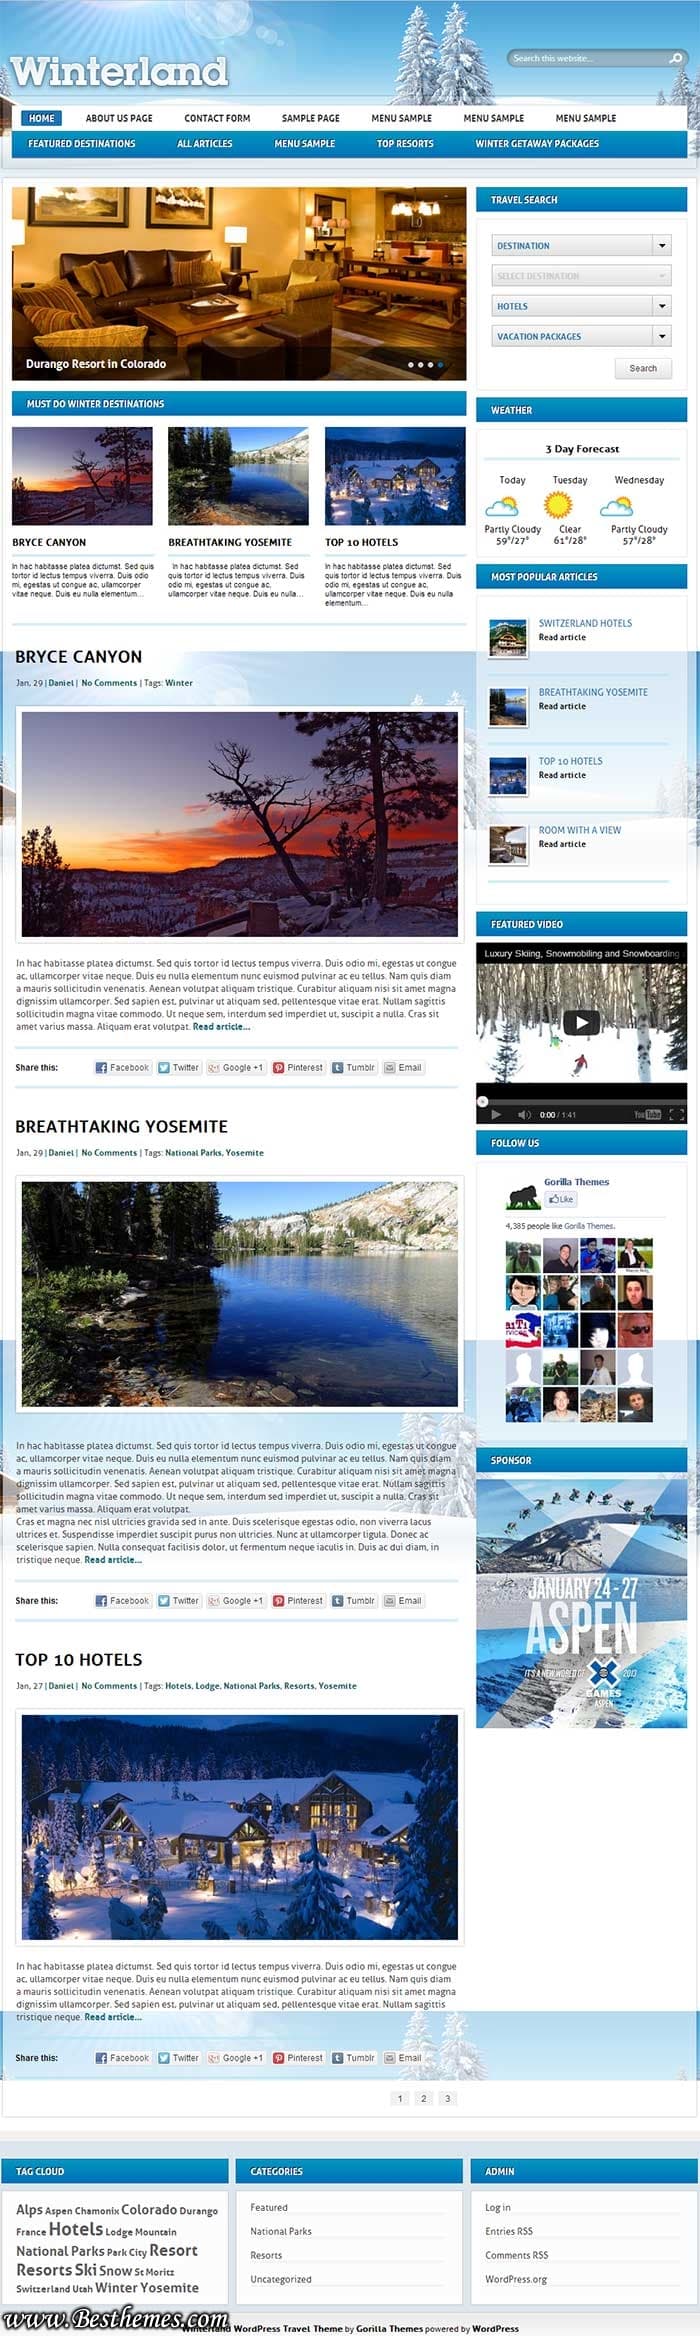 Winterland WordPress Theme, Best Travel Magazine WordPress Theme, Best Destination Showcase WordPress Theme, Best Tour WordPress Theme